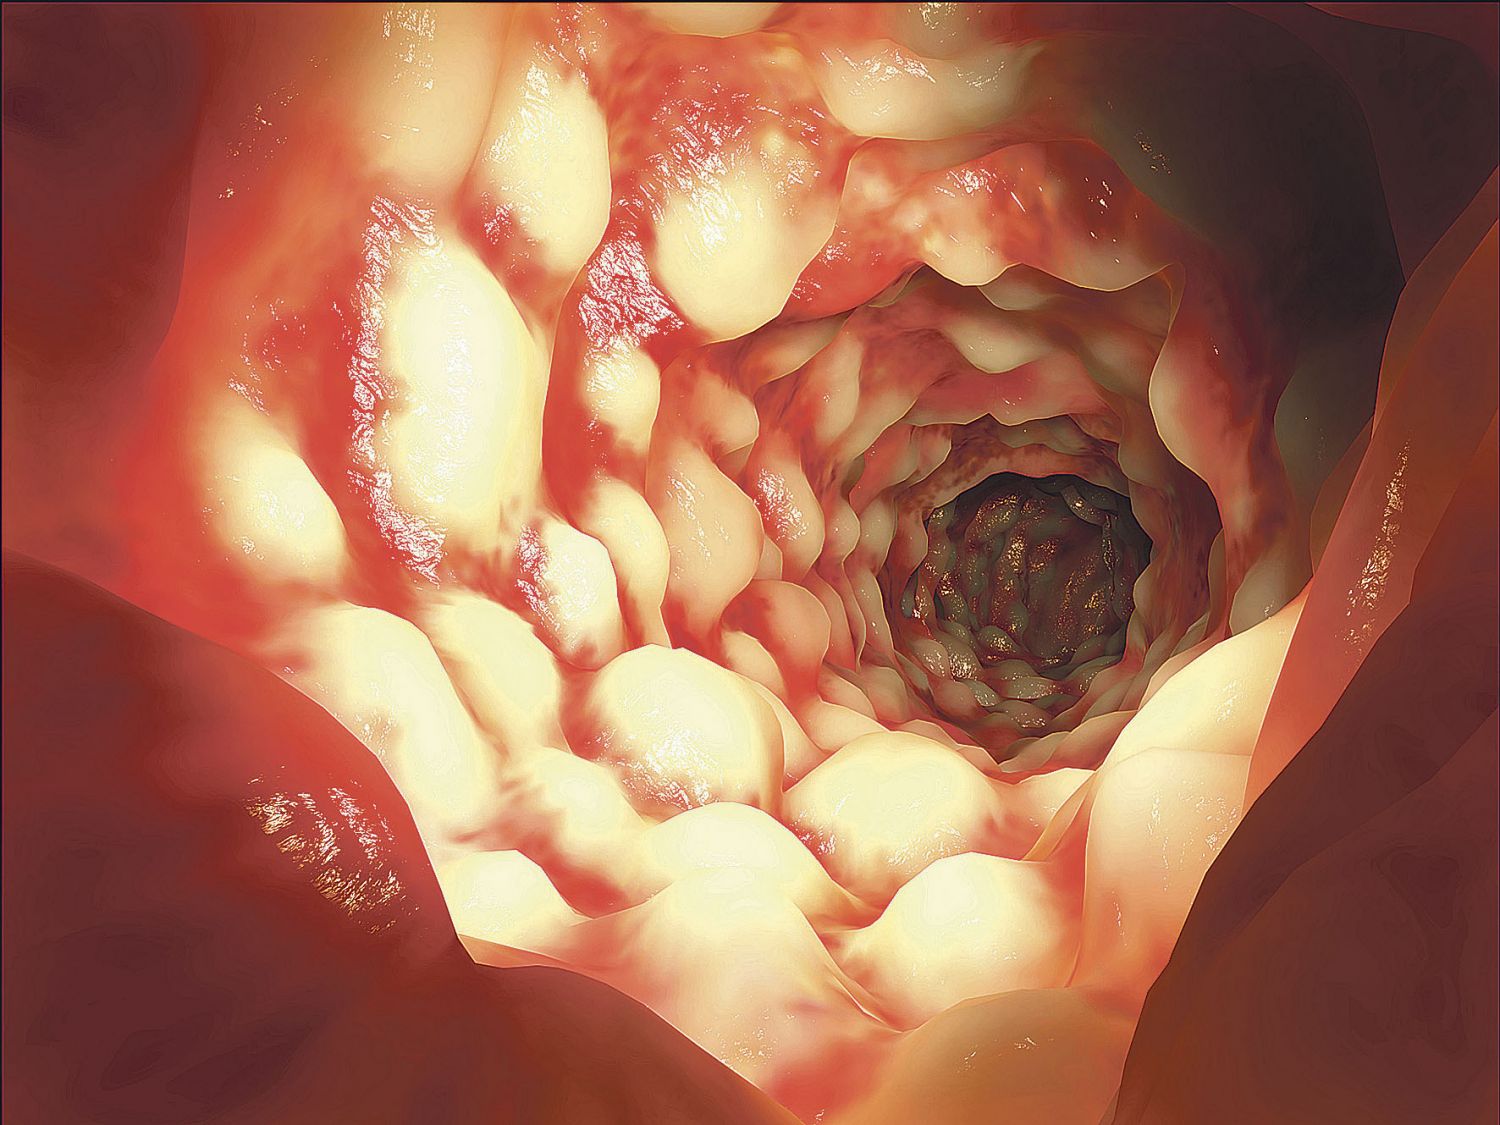  Grafik: Innenraum vom Darm. Thema: Morbus Crohn Therapie